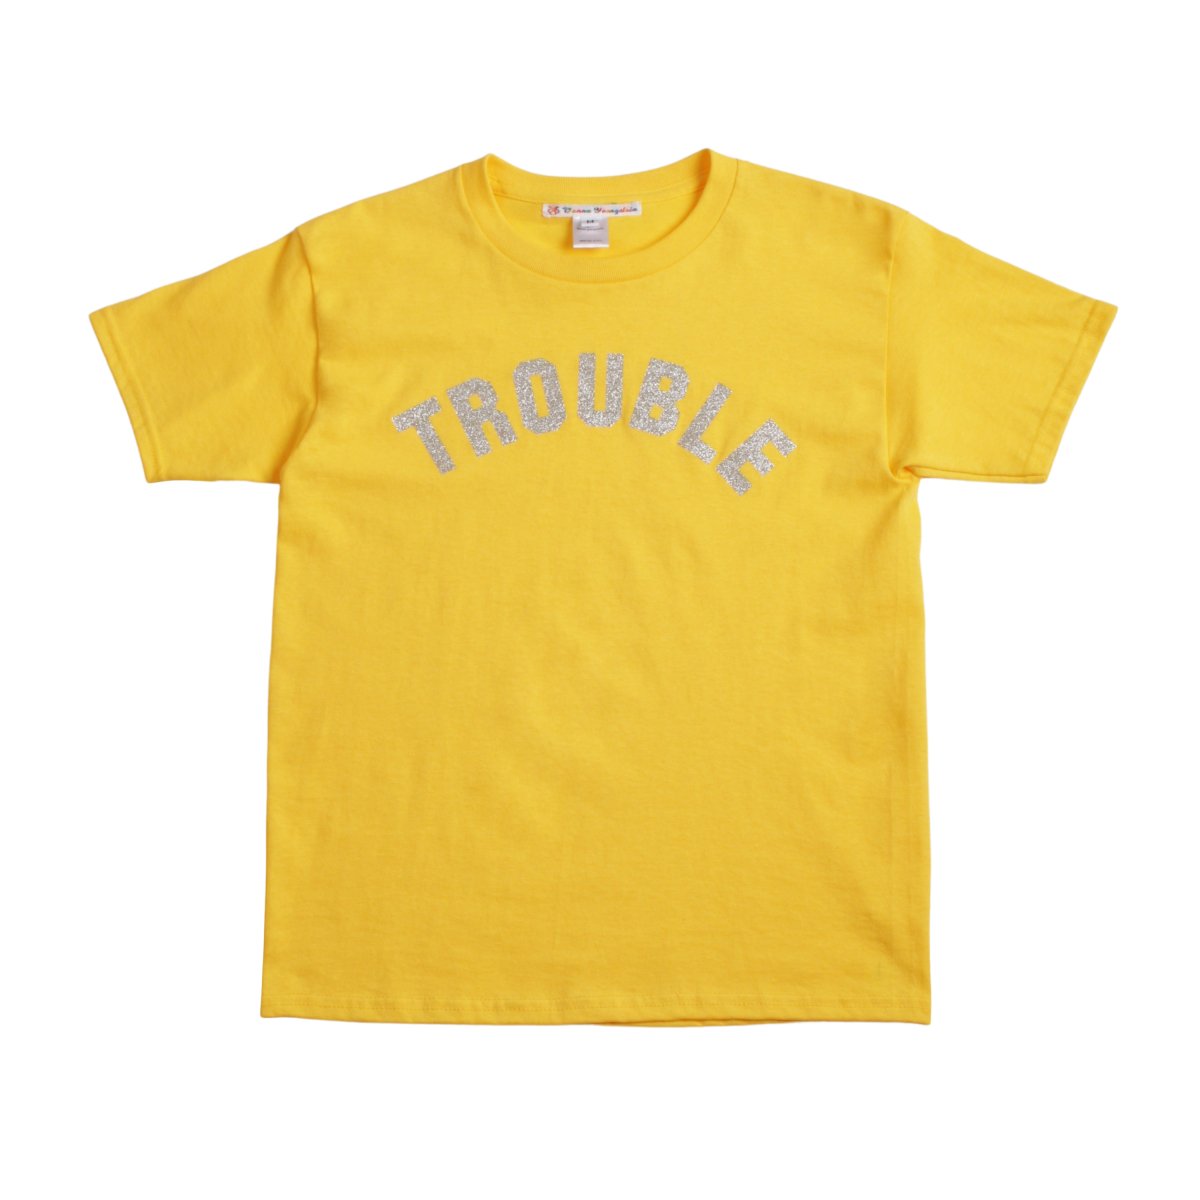 Trouble Tee【Yellow】